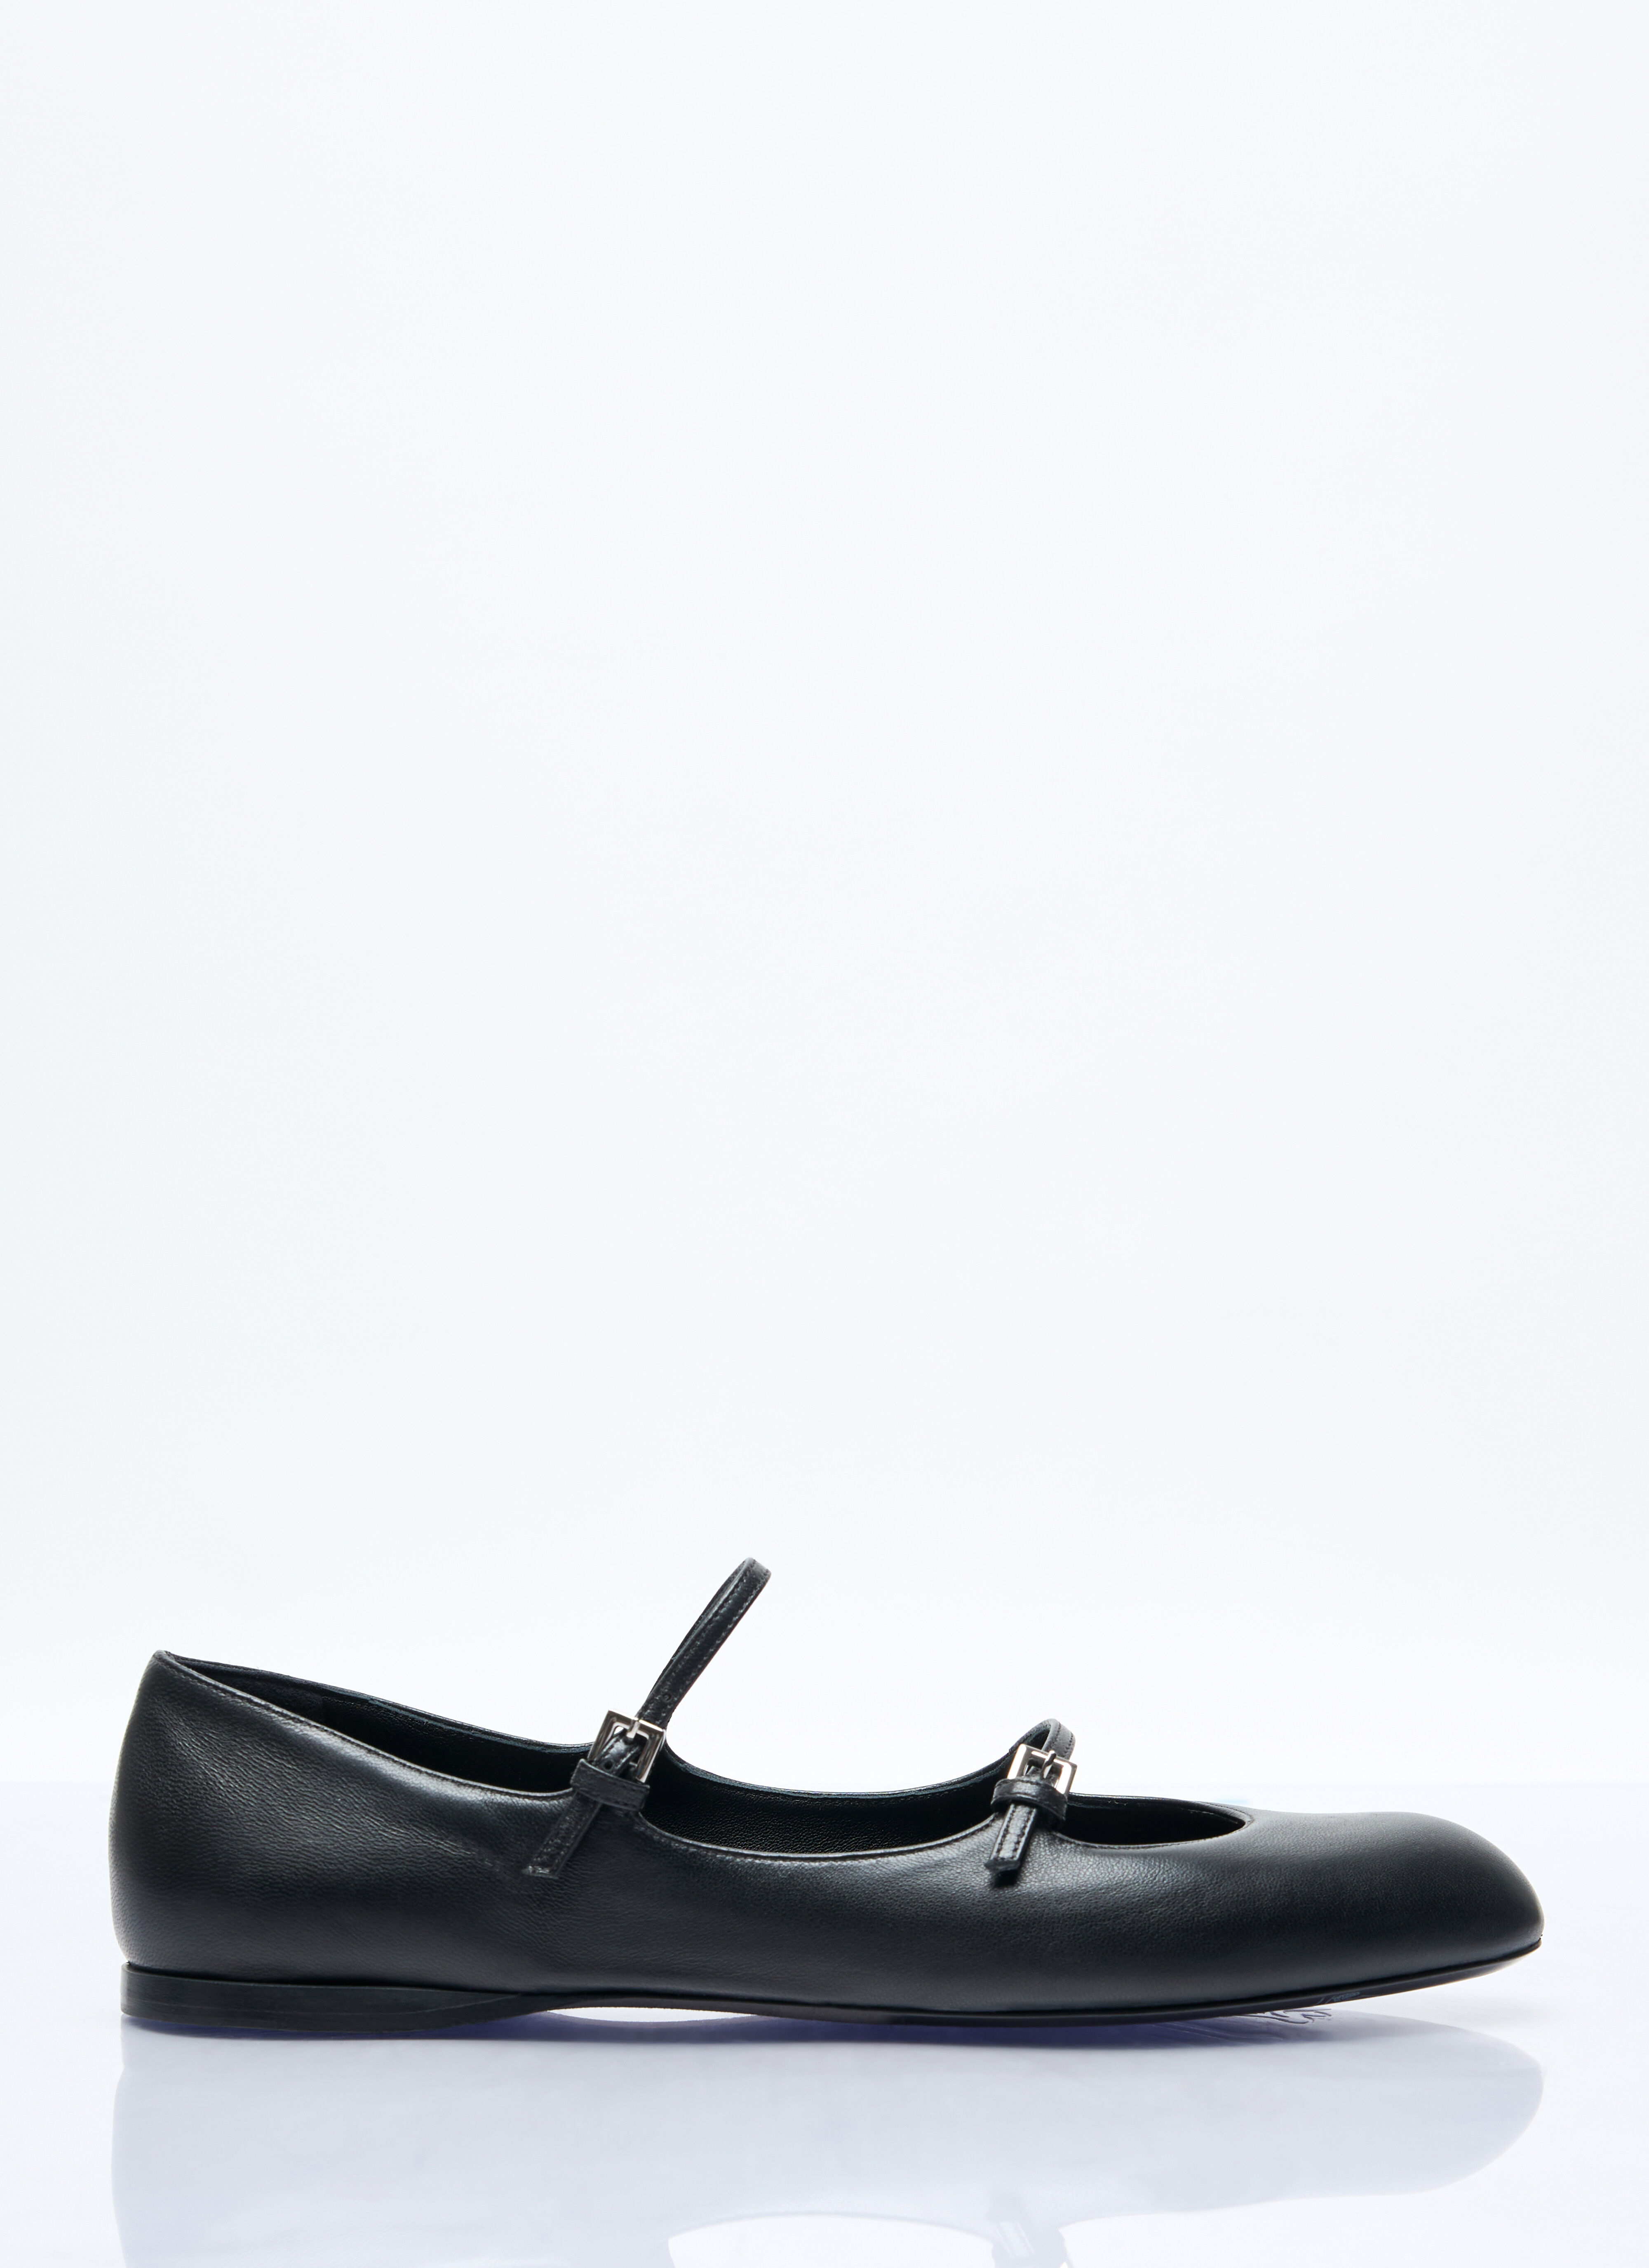 Marni Nappa Leather Ballet Flats Black mni0257019